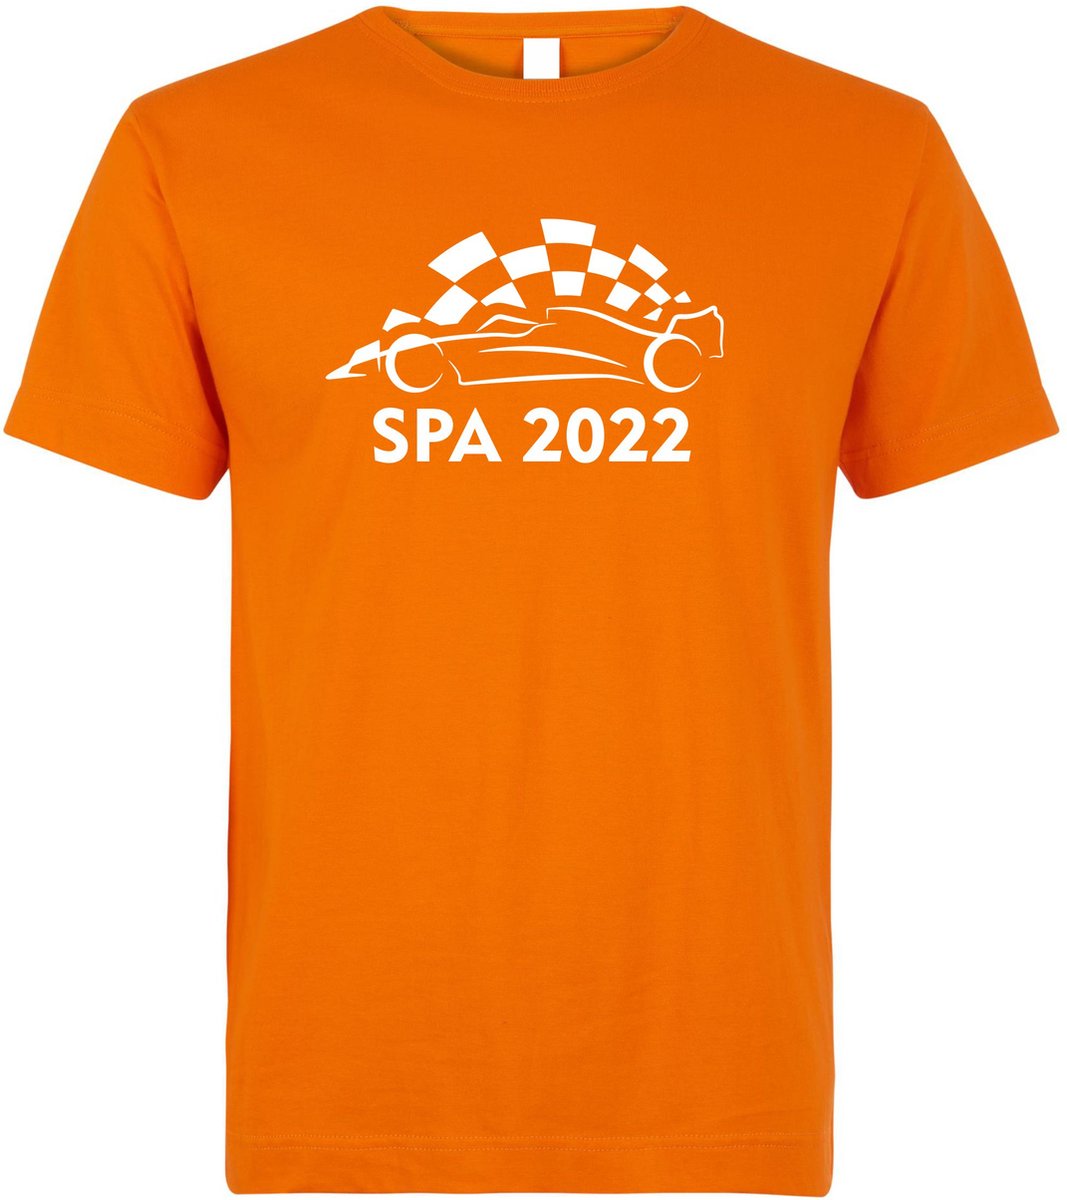 T-shirt Spa 2022 met raceauto | Max Verstappen / Red Bull Racing / Formule 1 fan | Grand Prix Circuit Spa-Francorchamps | kleding shirt | Oranje | maat XL